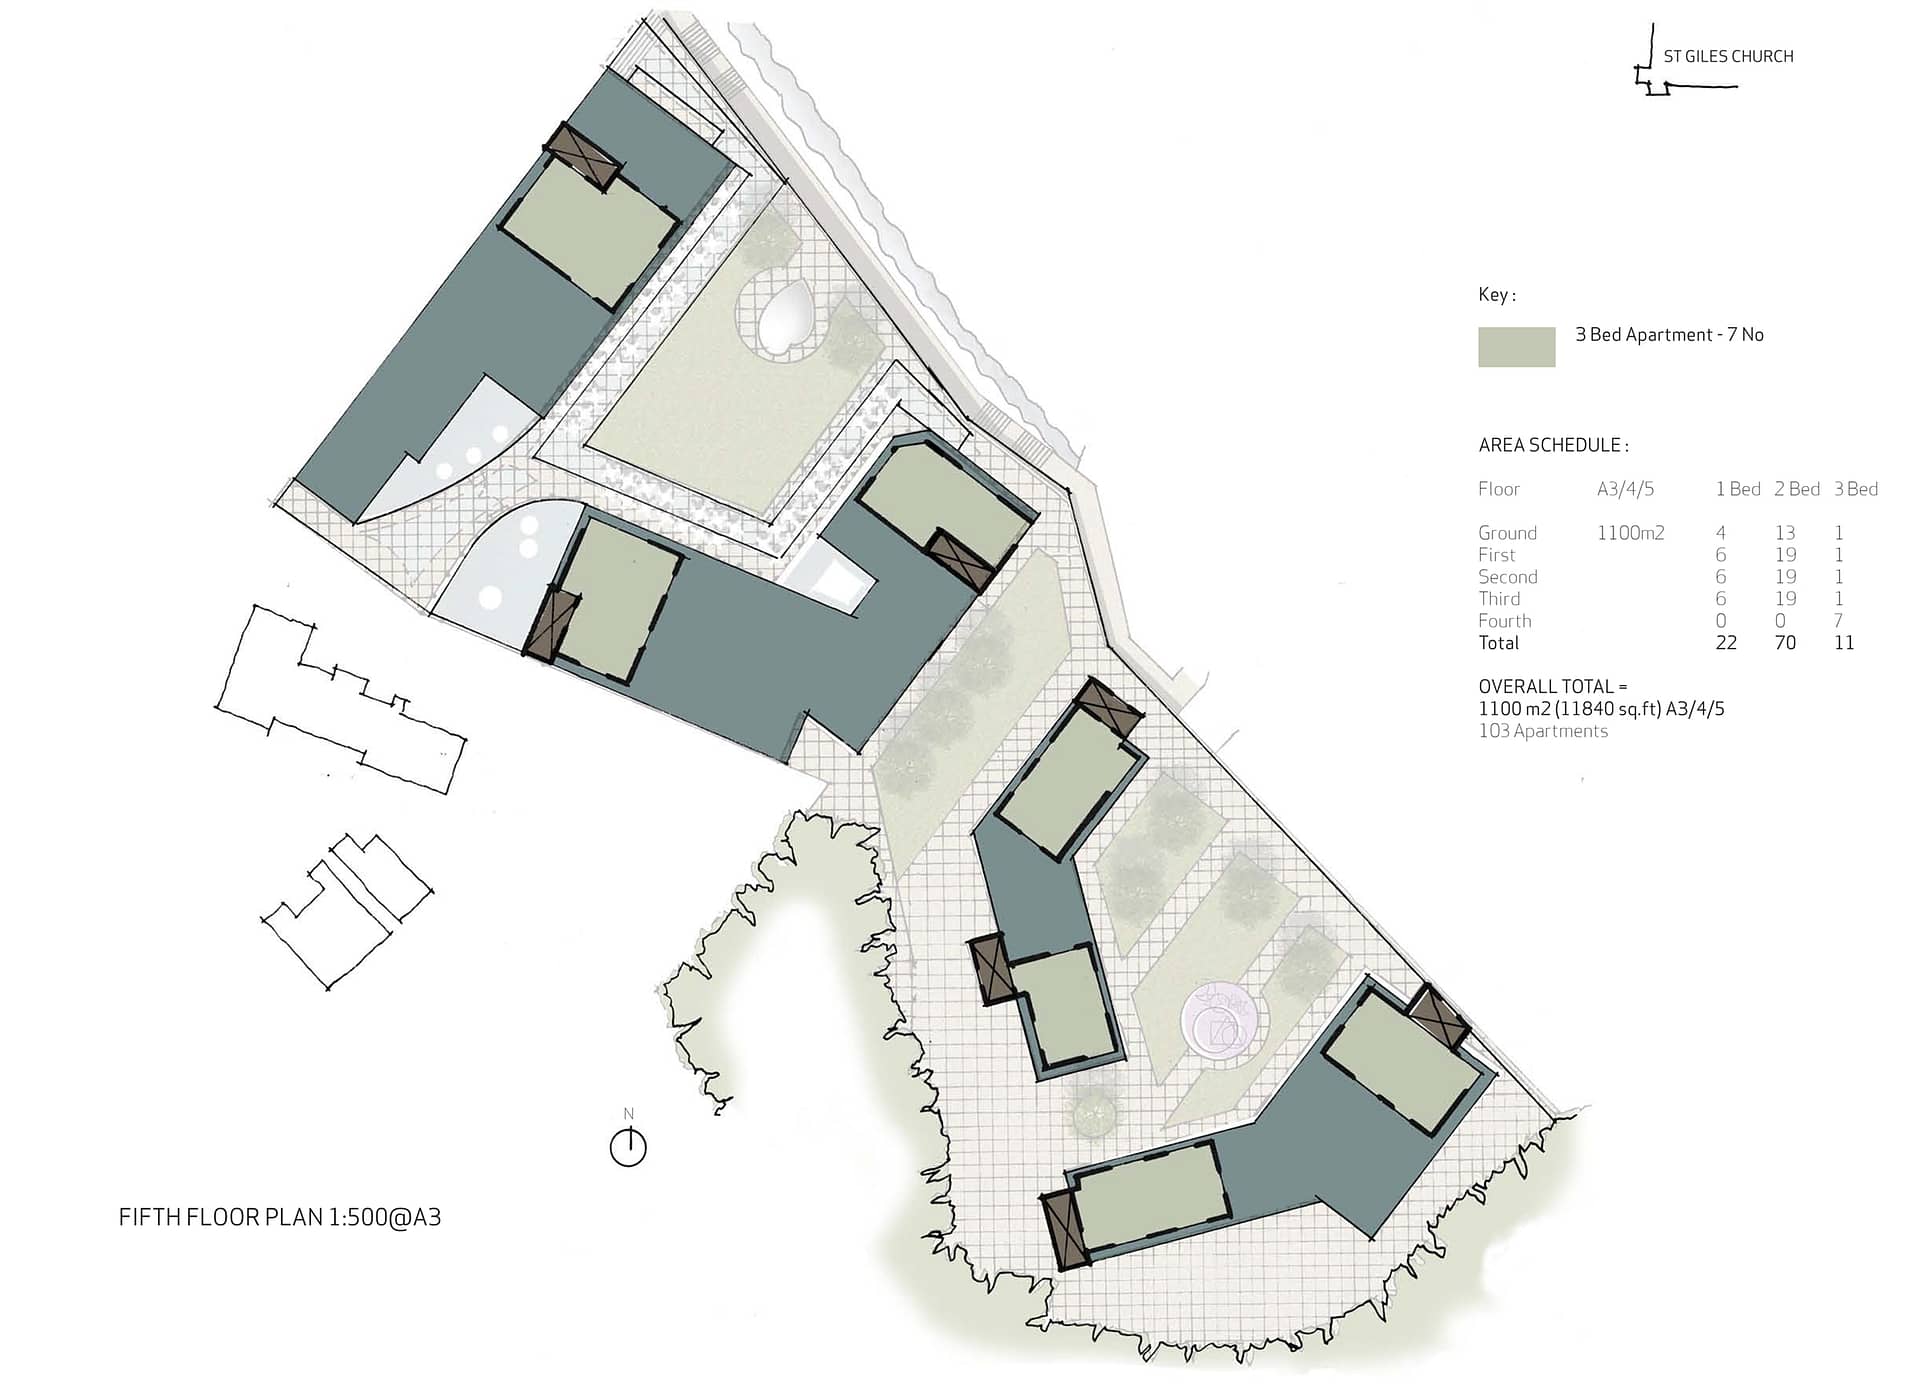 Proposed Mixed-Use Development, Wrexham 5th Floor Plan